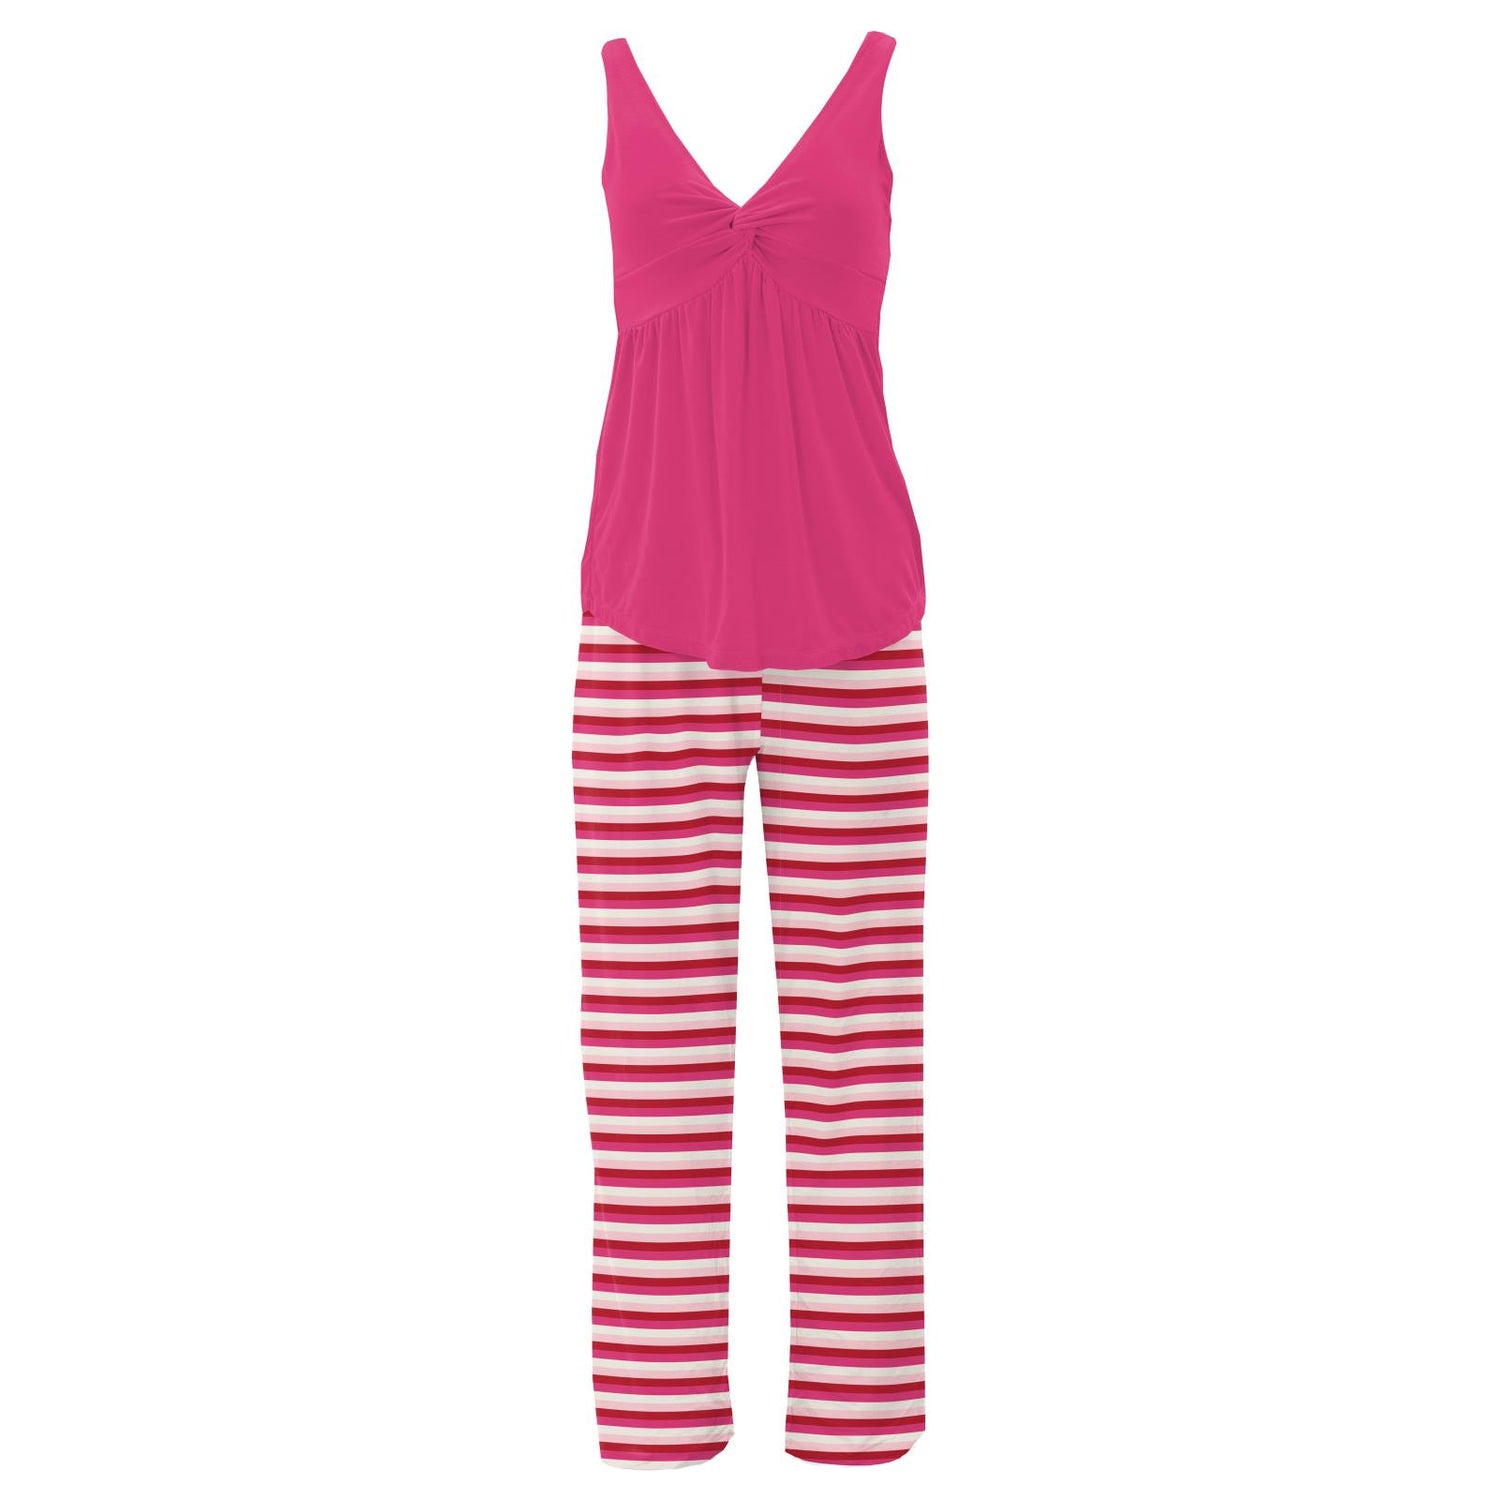 Women's Print Twist Tank and Pajama Pants Set in Anniversary Candy Stripe